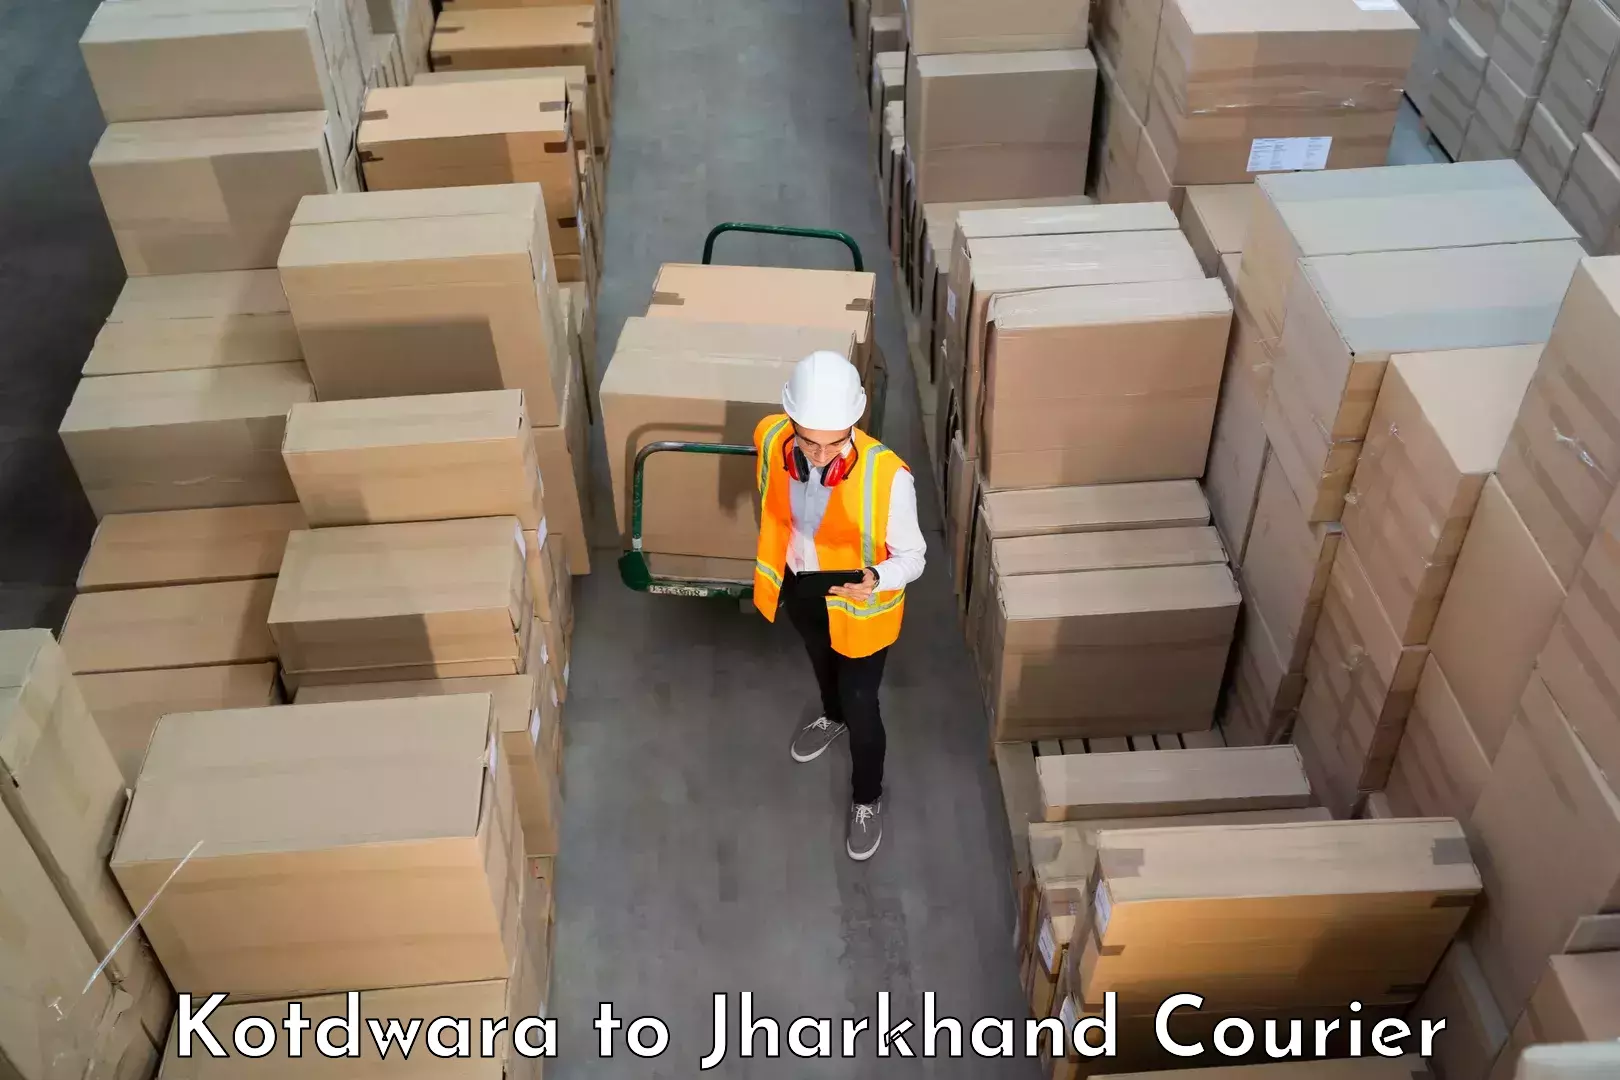 Professional movers and packers Kotdwara to Bokaro